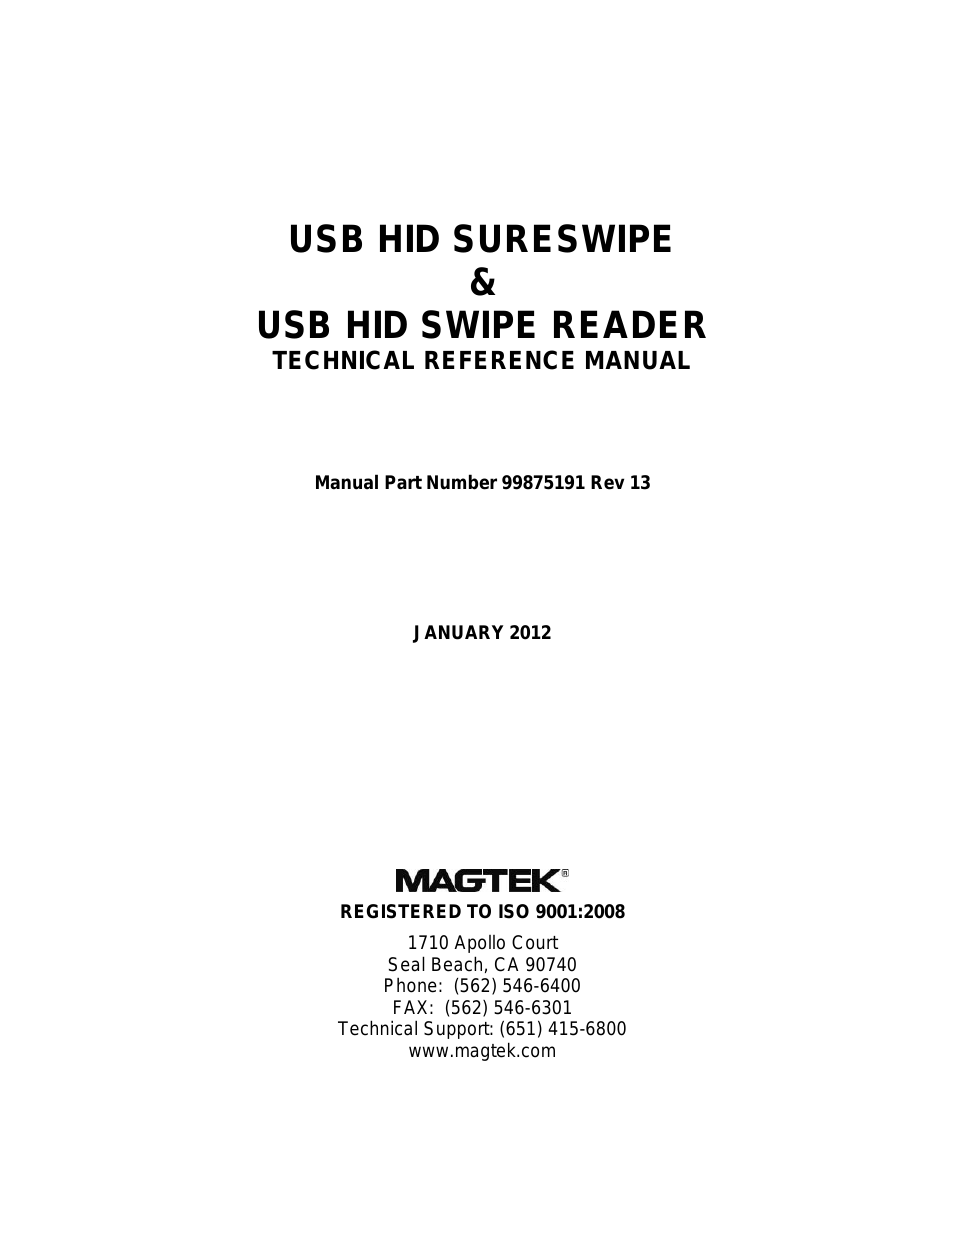 USB HID SURESWIPE &  USB HID SWIPE READER